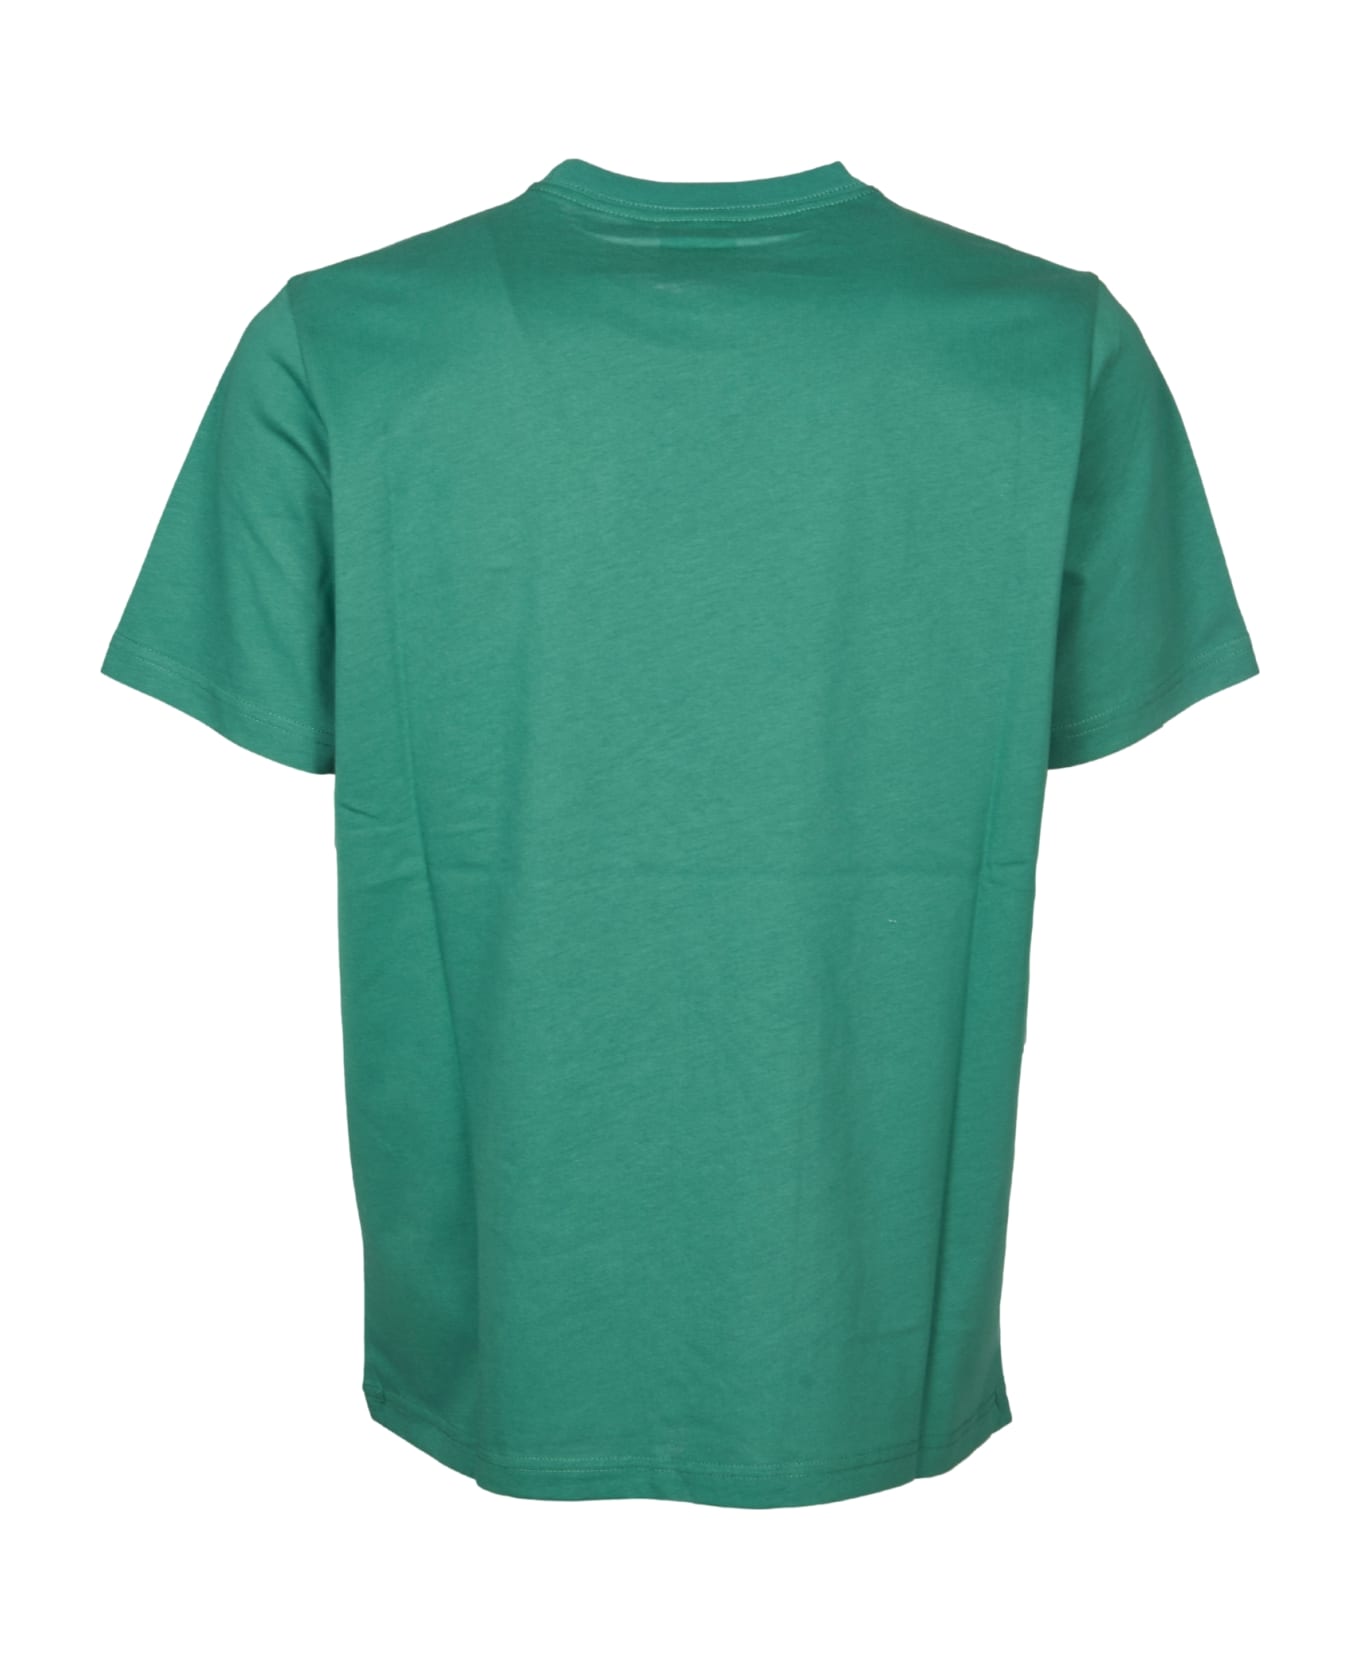 Paul Smith T-shirt - Green